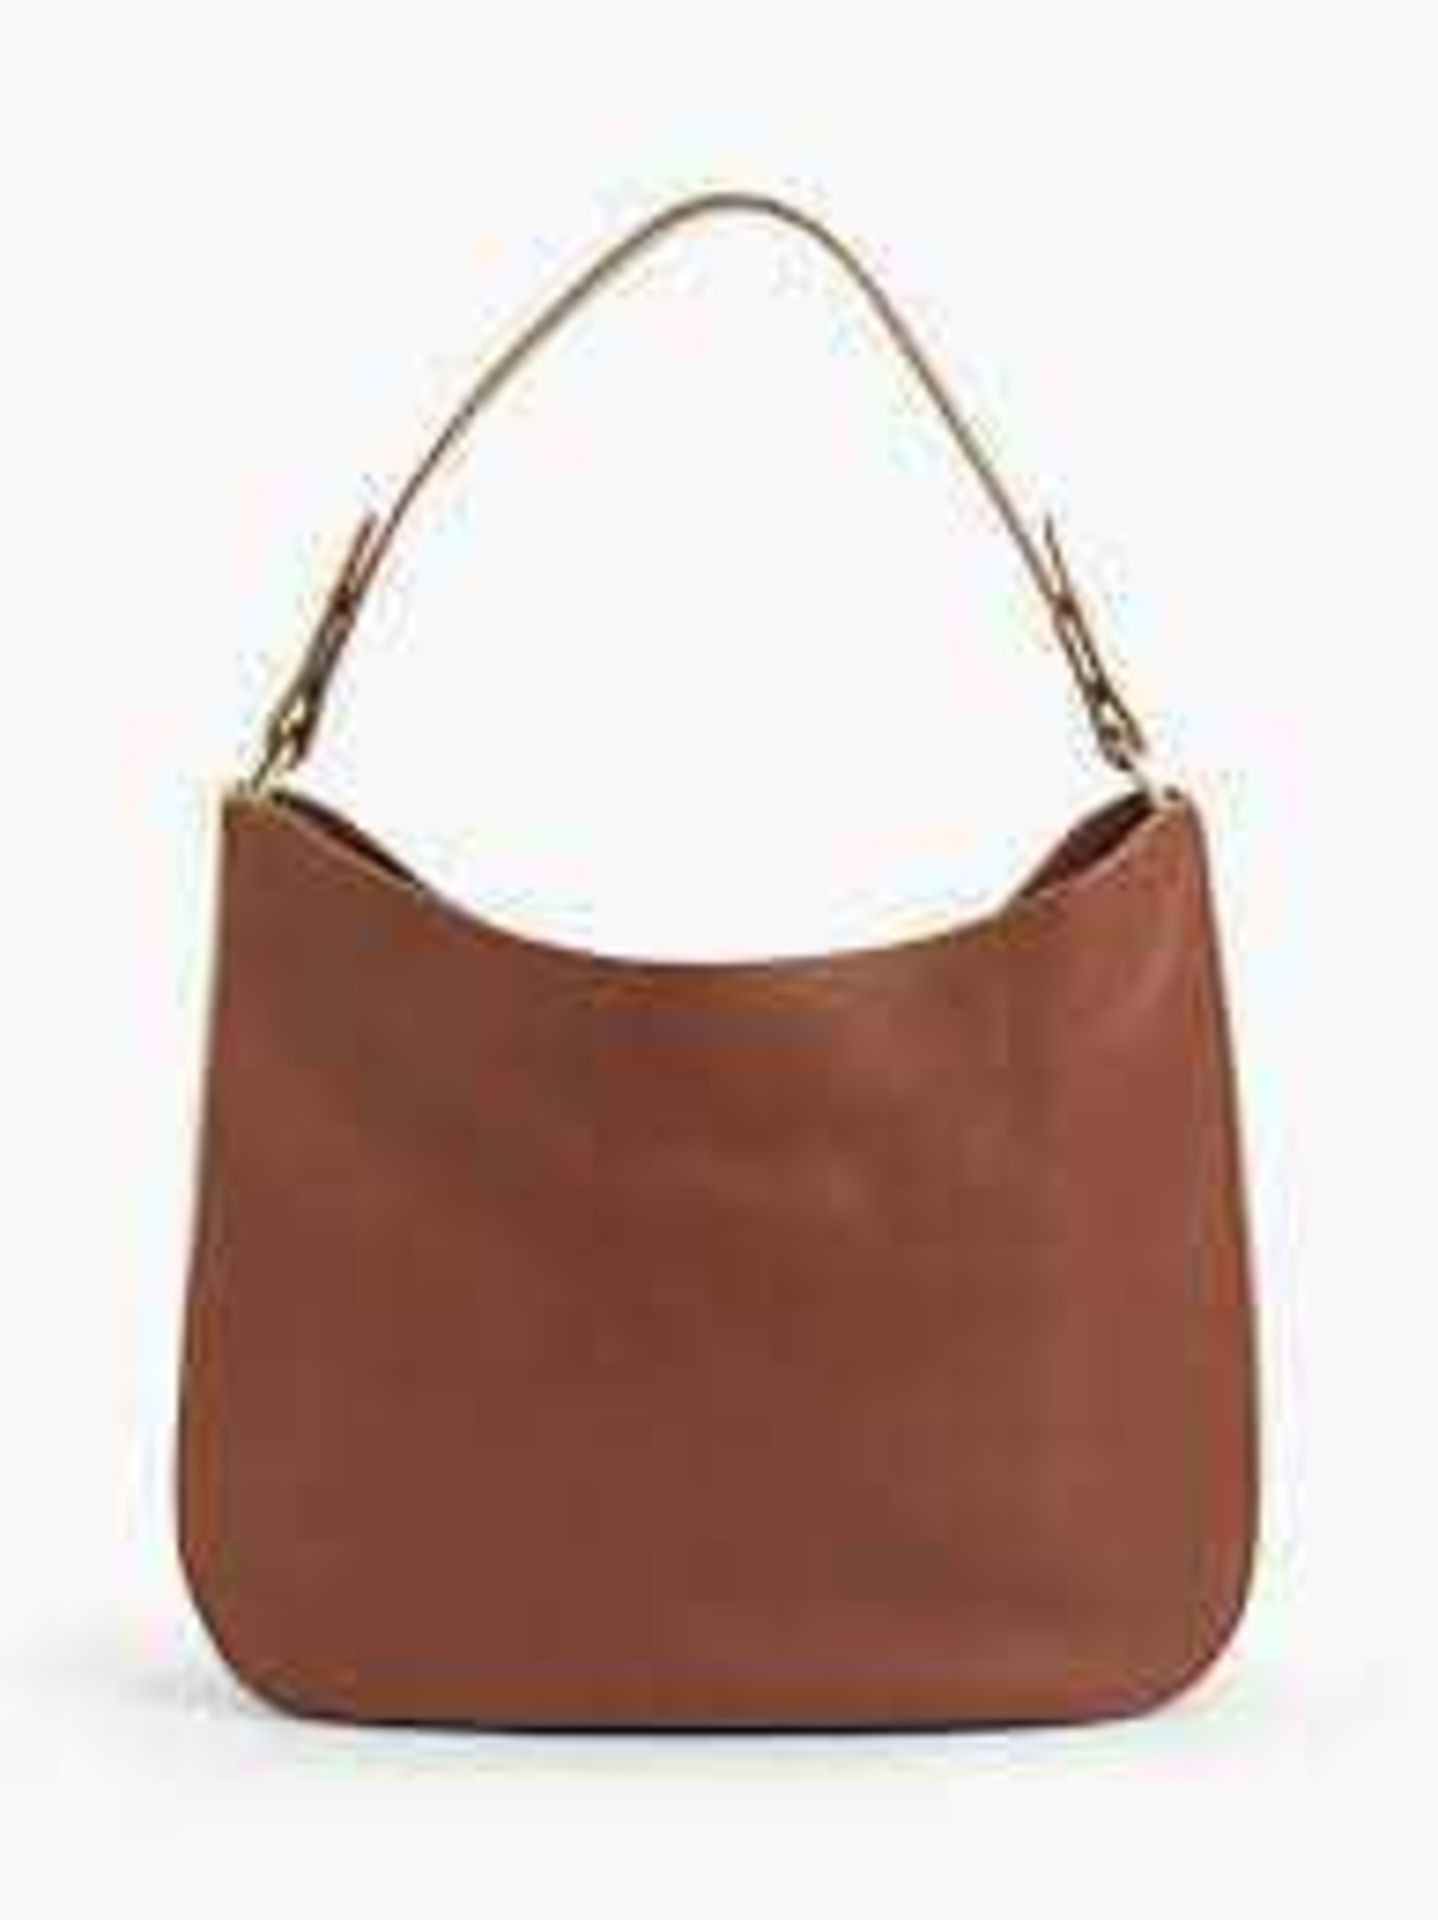 RRP £80-£110 Each Assorted Bagged John Lewis Designer Bags - Image 2 of 2